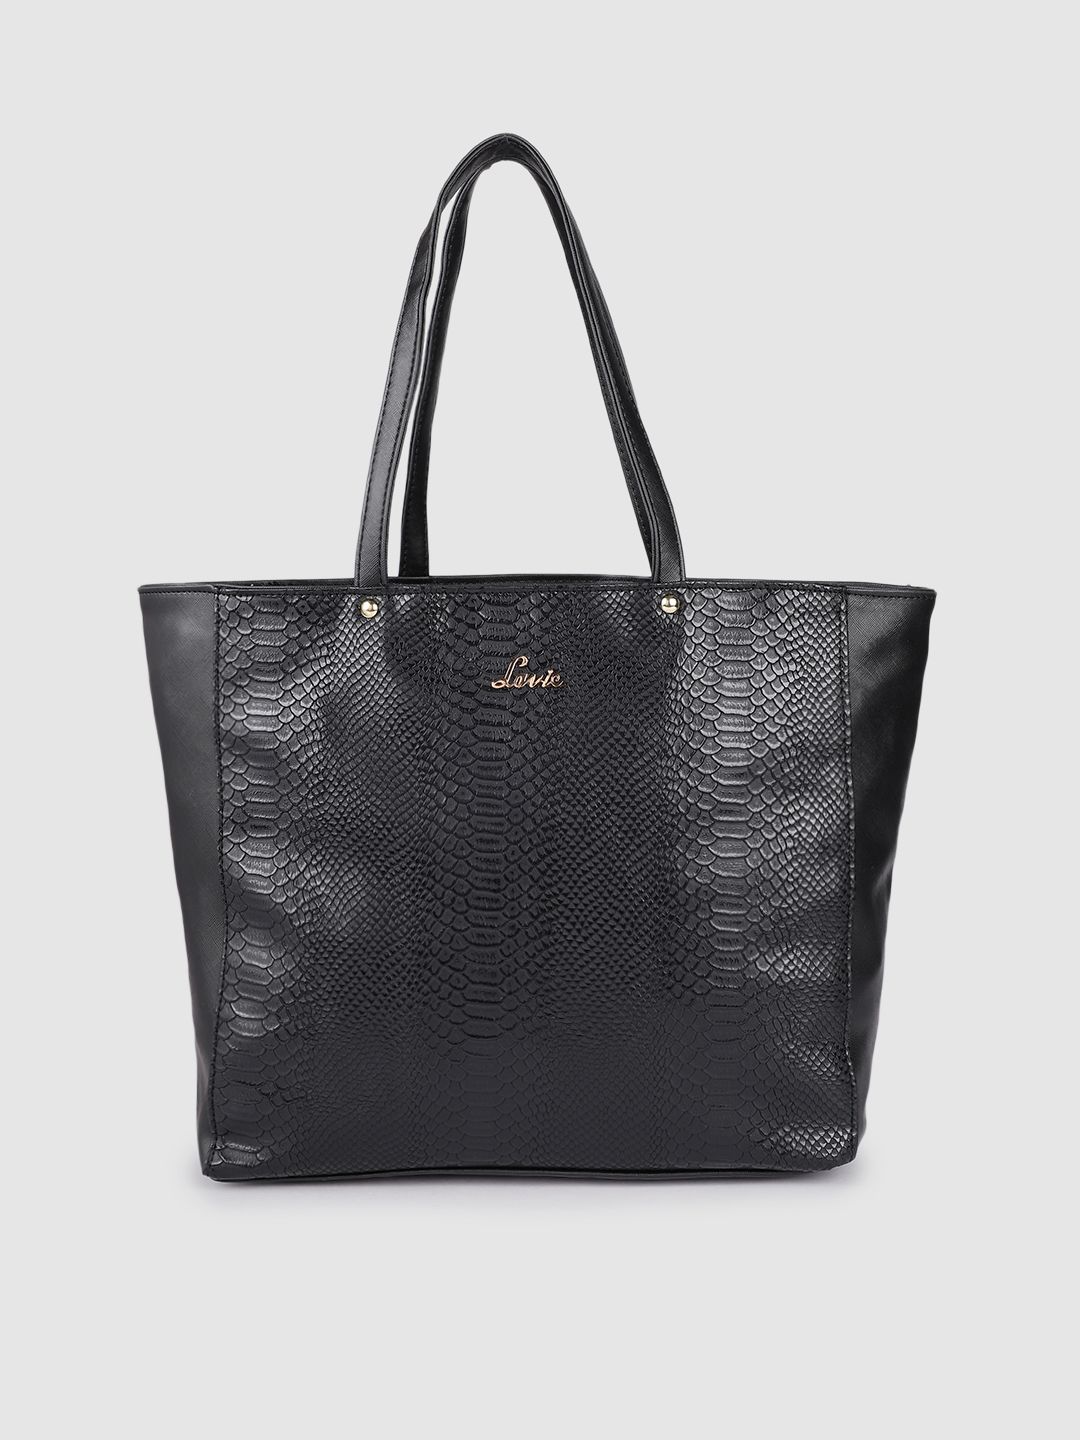 Lavie Black Textured Structured Shoulder Bag Price in India